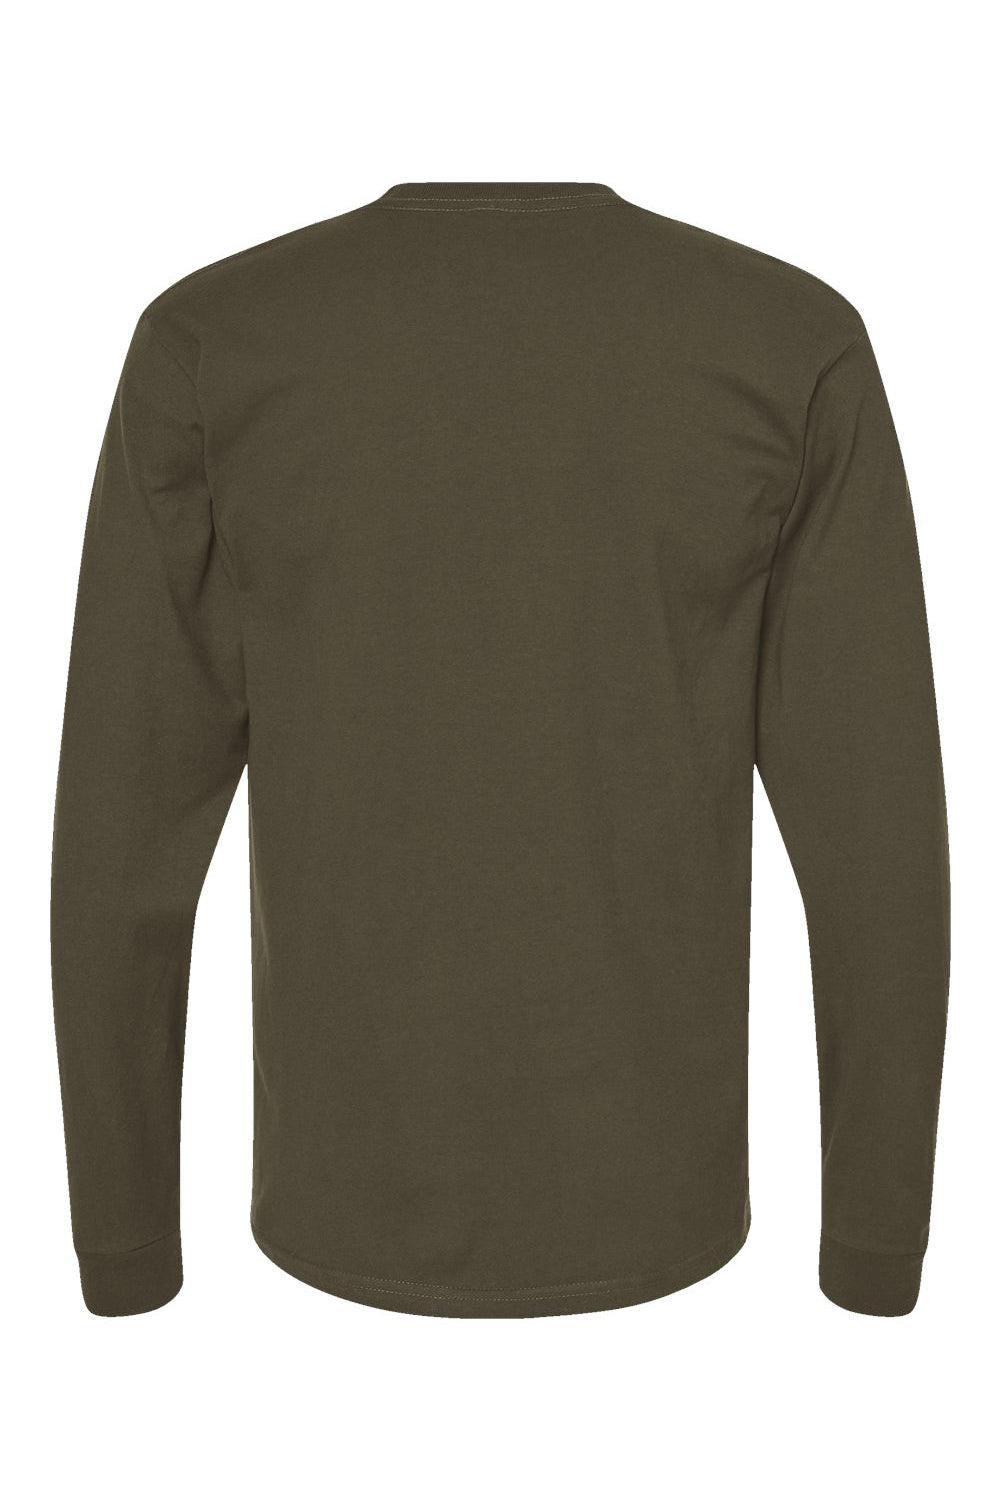 Tultex 291 Mens Jersey Long Sleeve Crewneck T-Shirt Grape Leaf Green Flat Back